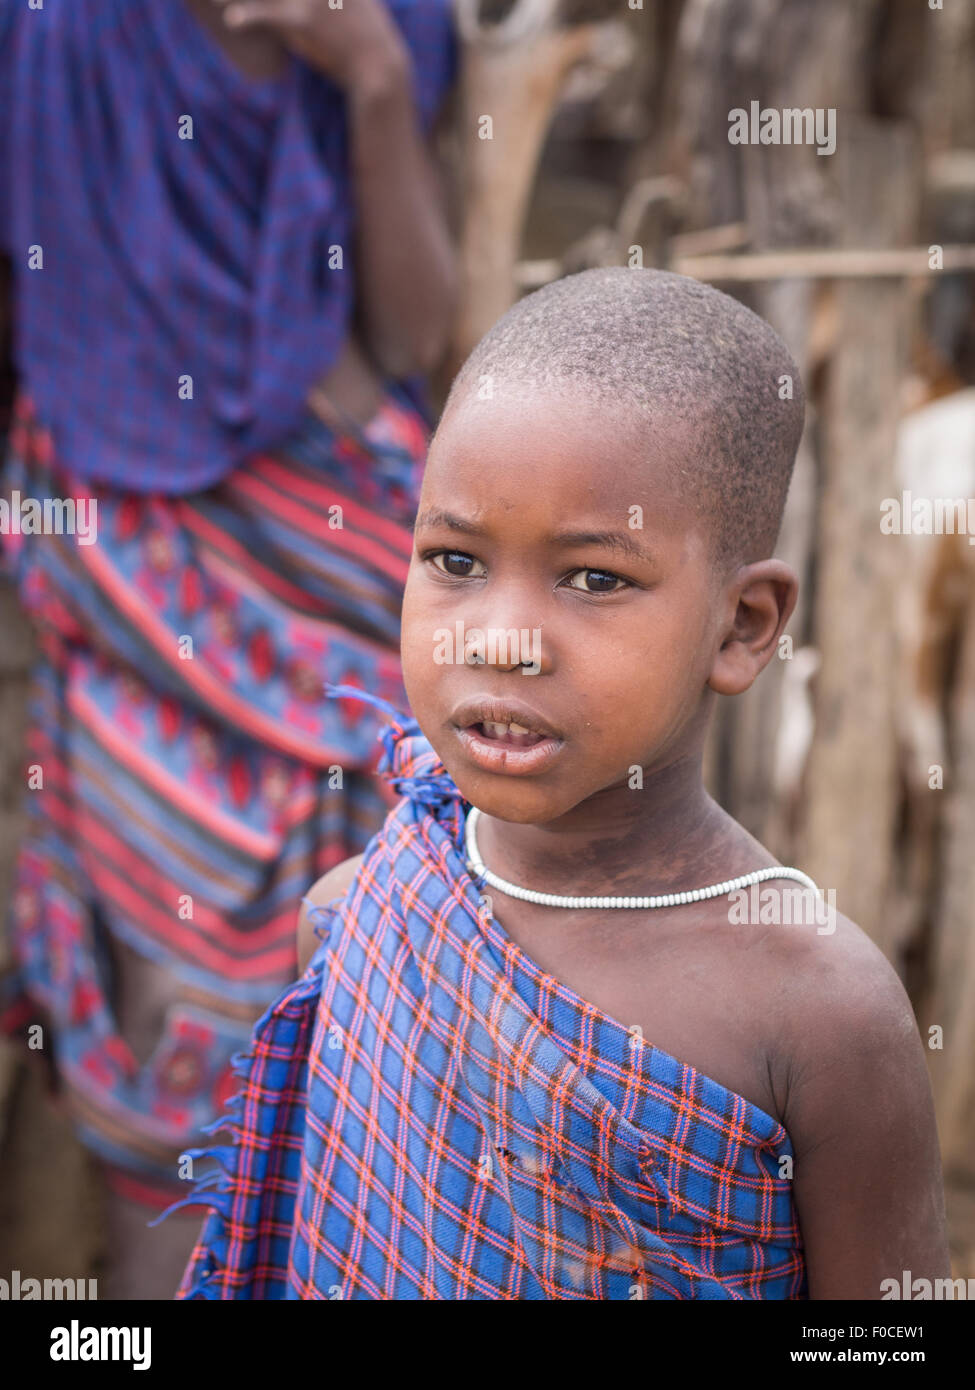 Maasai child next to a goat croft in Maasai boma (village) in Tanzania, Africa. Stock Photo